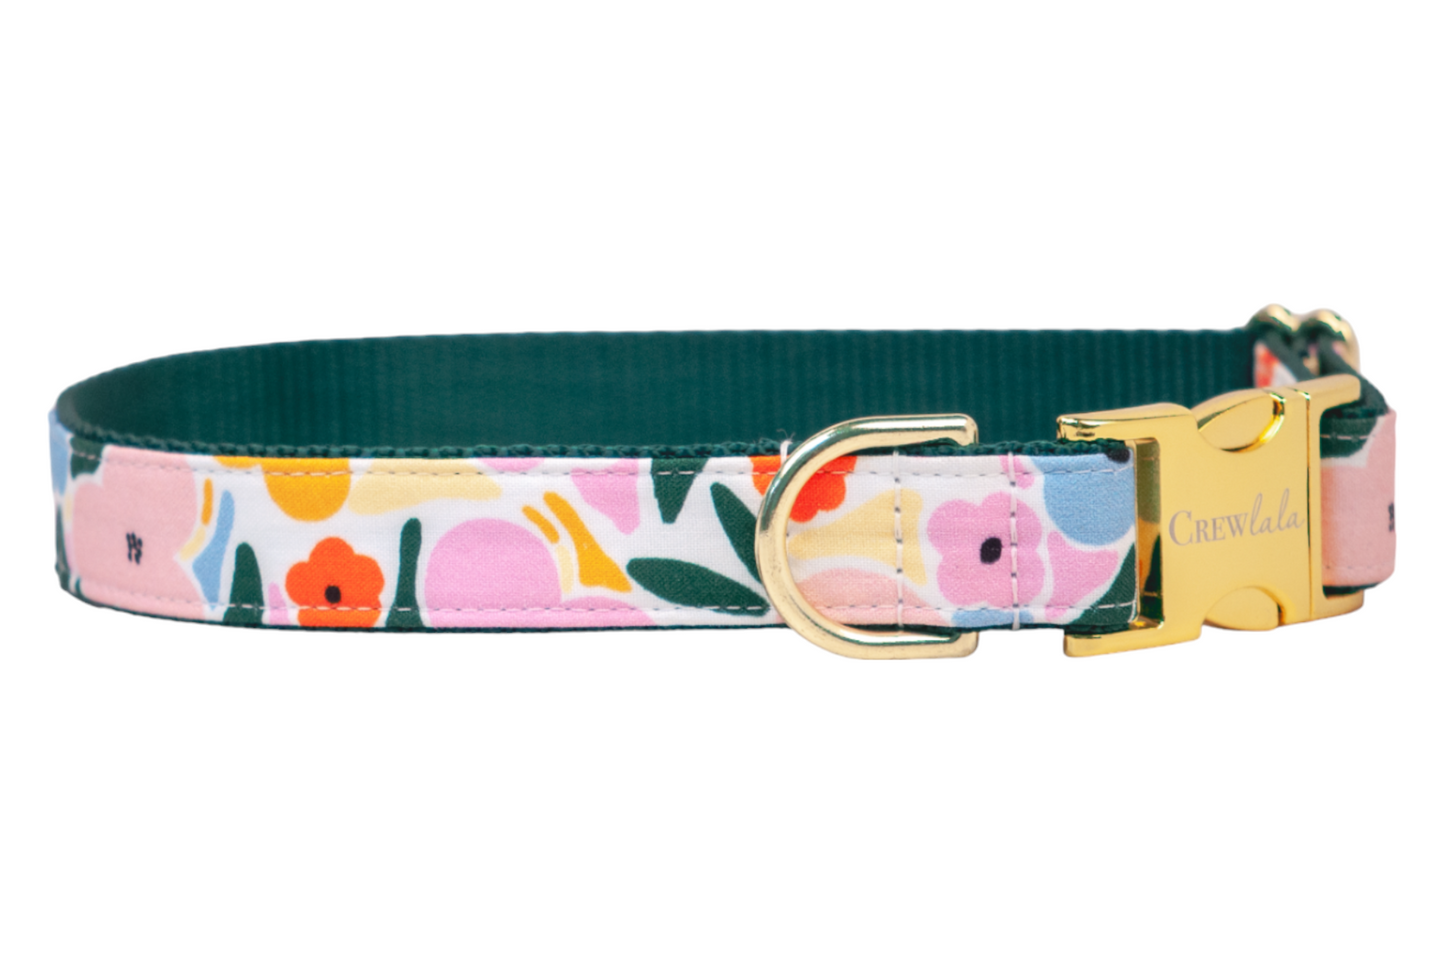 Mosaic Blooms Belle Bow Dog Collar - Crew LaLa